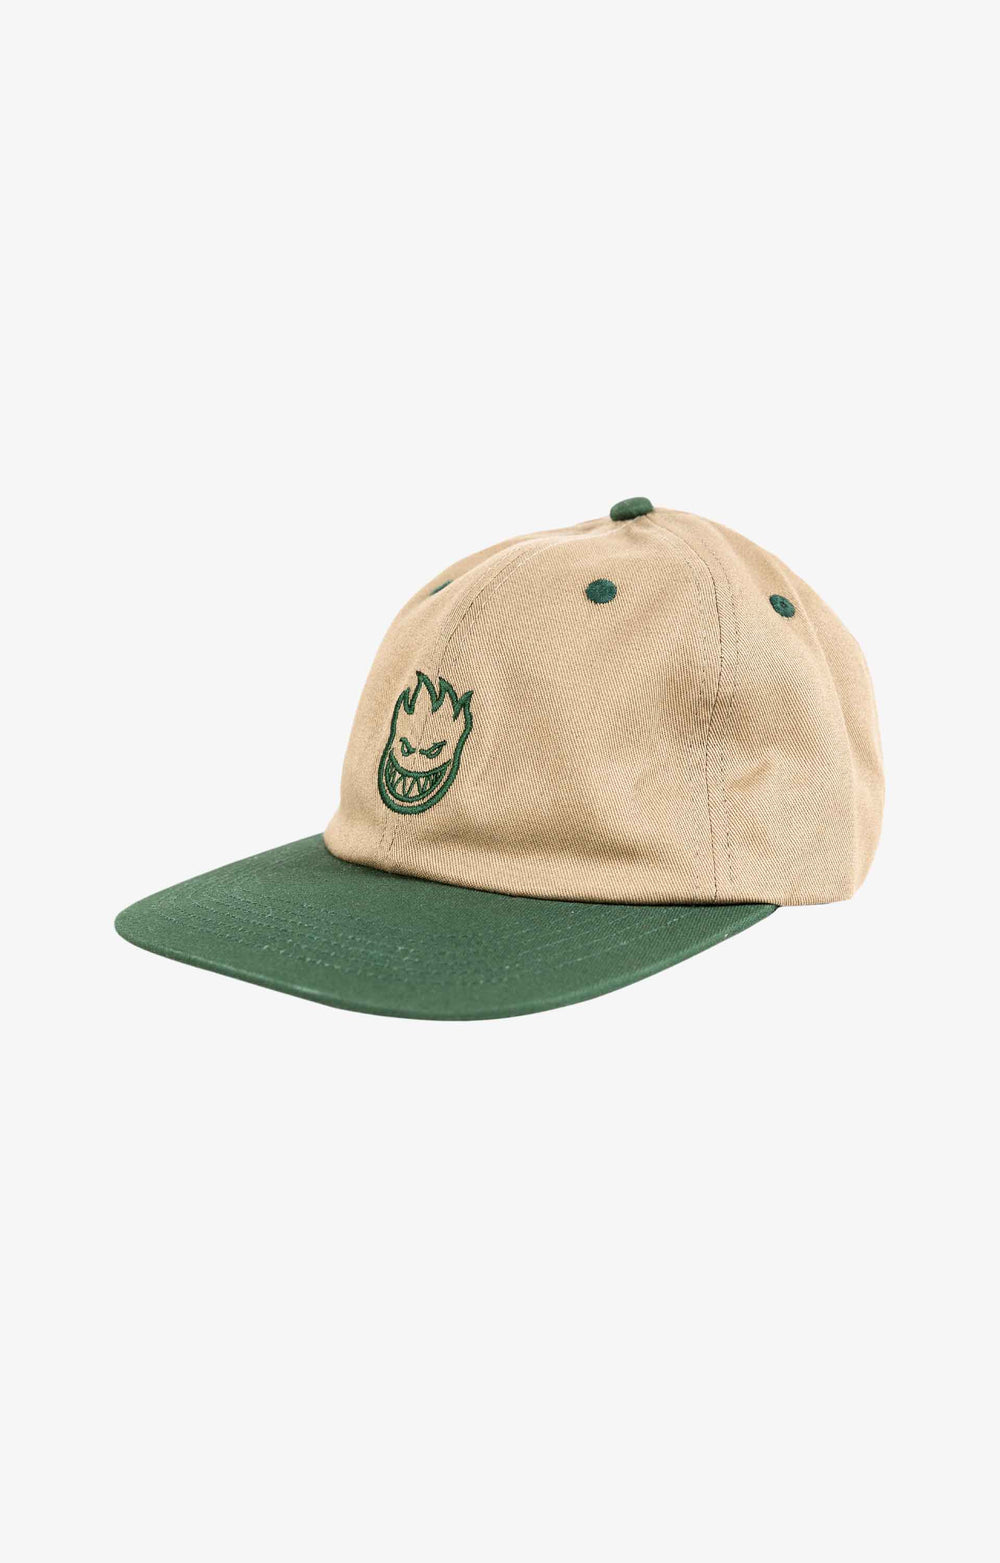 Spitfire Lil Bighead Adjustable Cap Headwear, Tan/Green